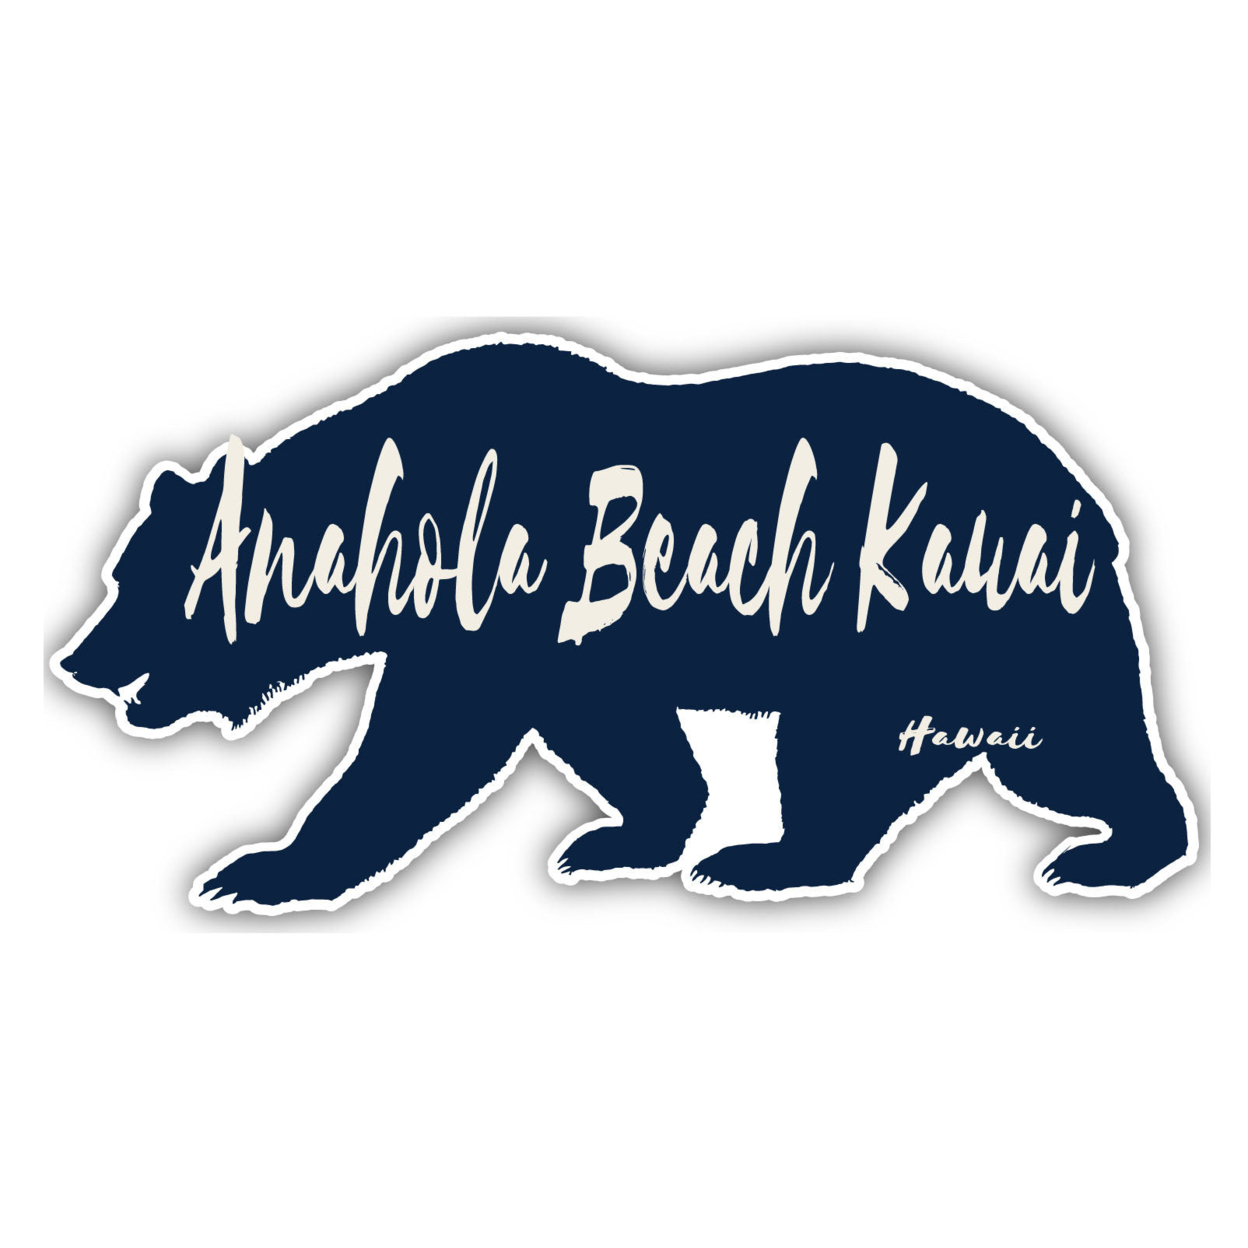 Anahola Beach Kauai Hawaii Souvenir Decorative Stickers (Choose Theme And Size) - Single Unit, 10-Inch, Bear